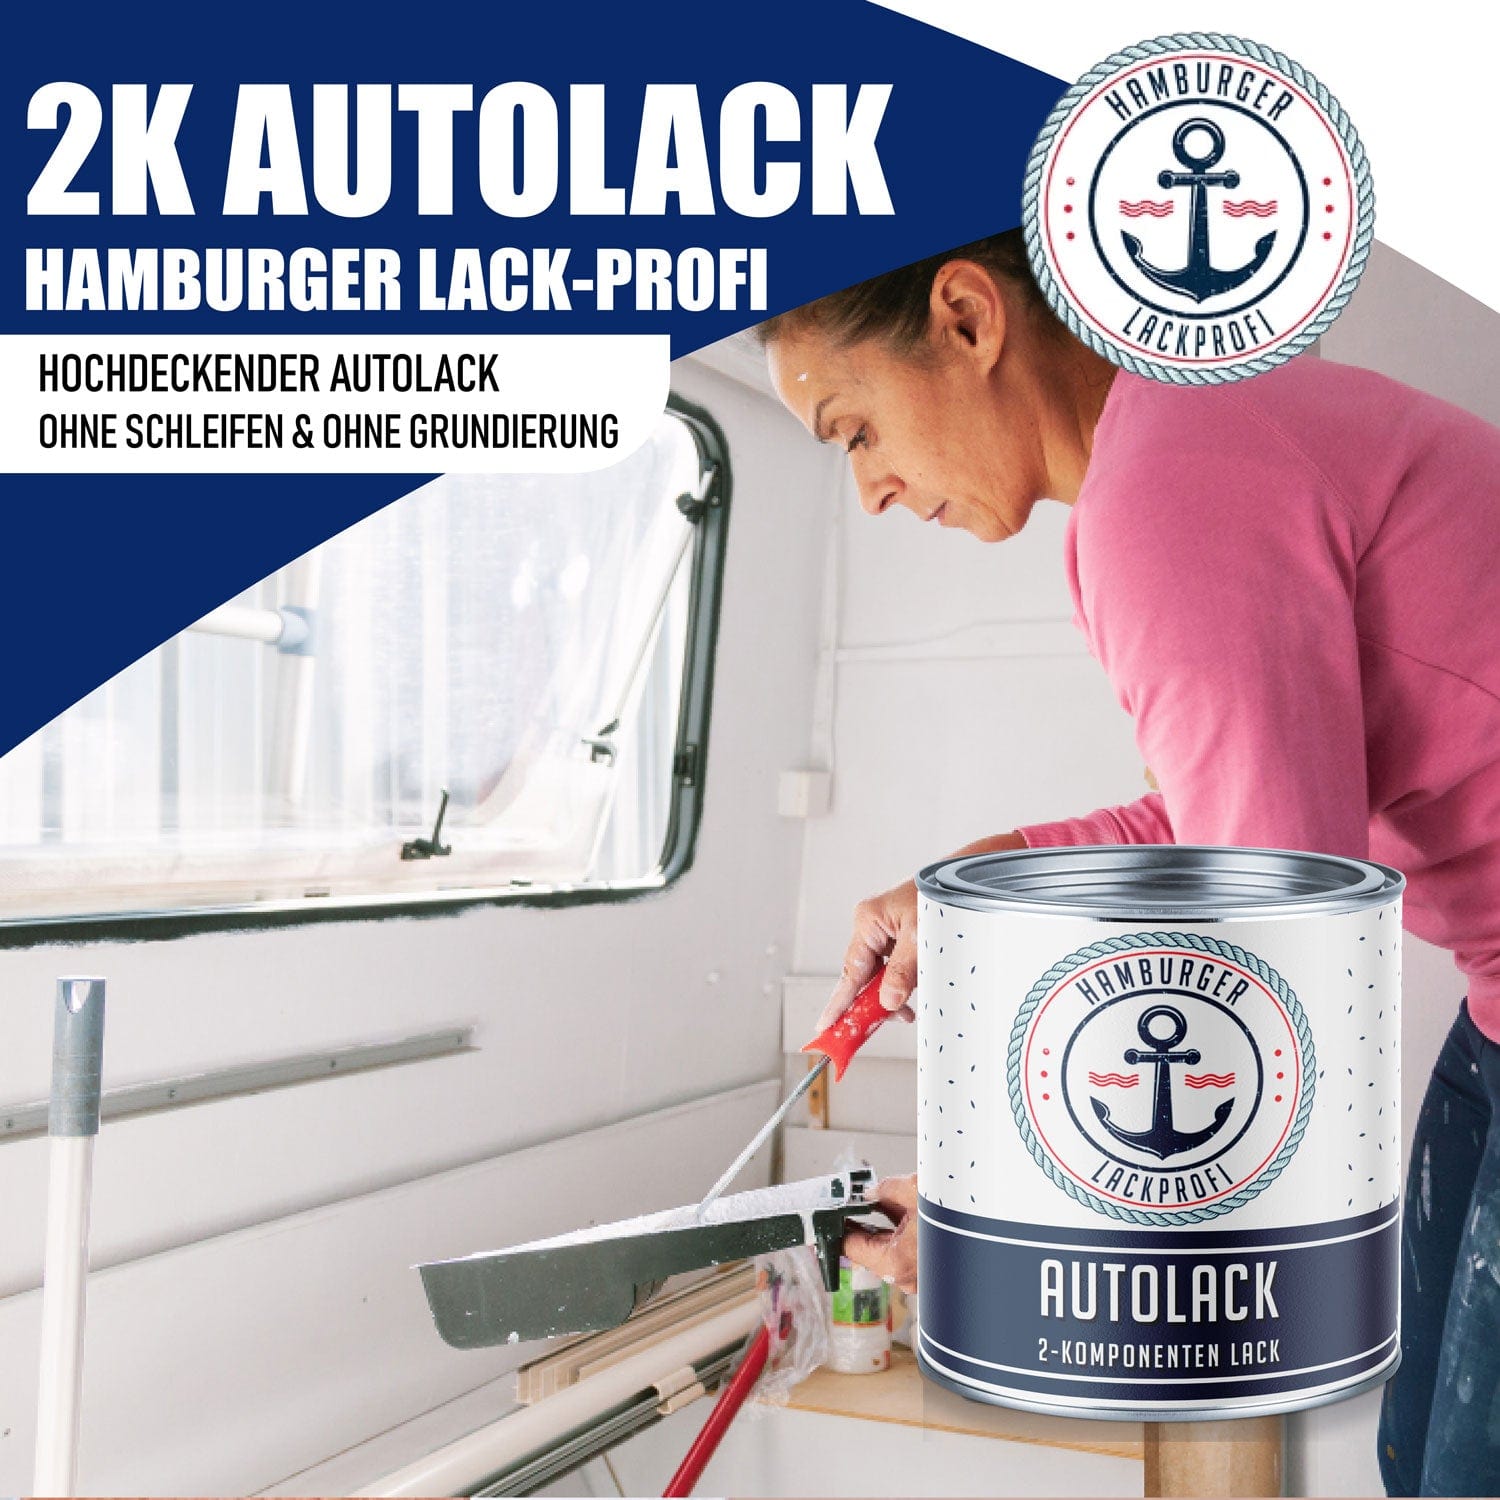 Hamburger Lack-Profi Lacke & Beschichtungen Hamburger Lack-Profi 2K Autolack Kobaltblau RAL 5013 - hochdeckend & rostschützend